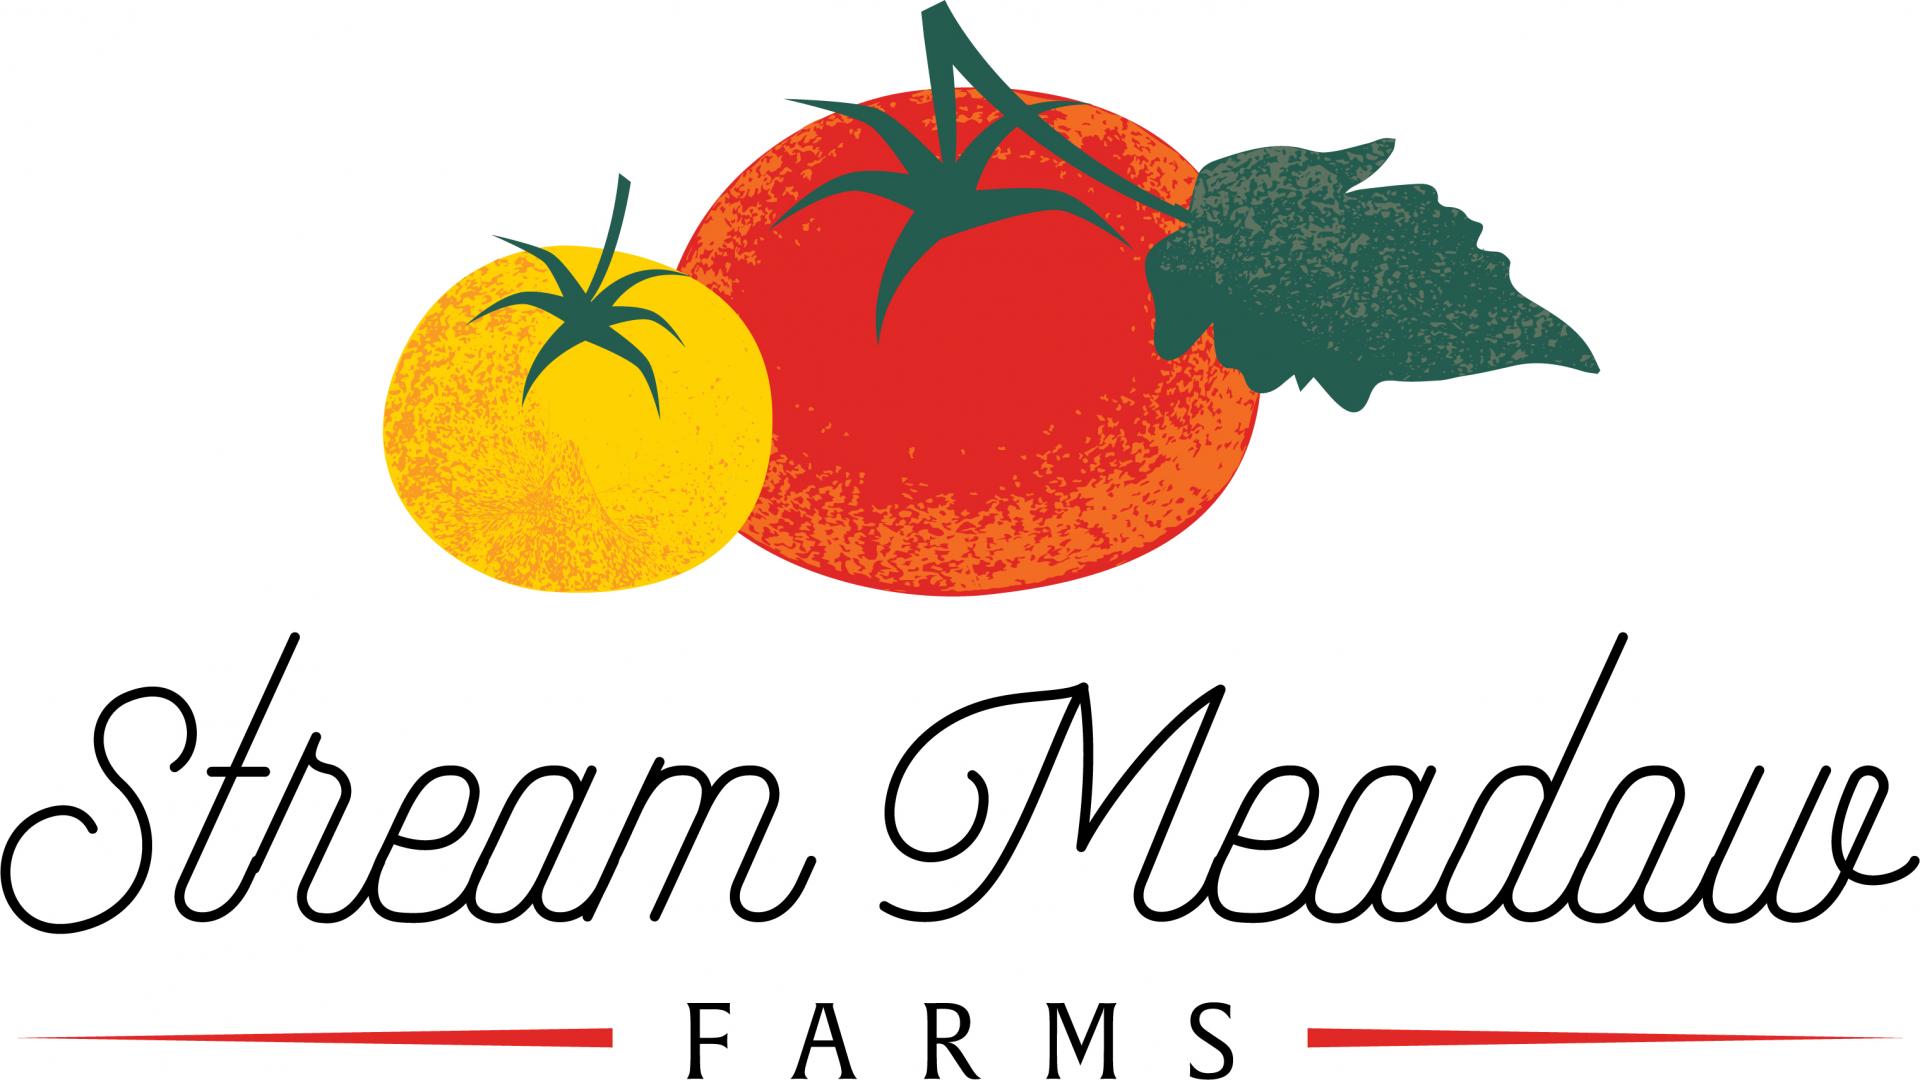 Stream Meadow Farms Logo